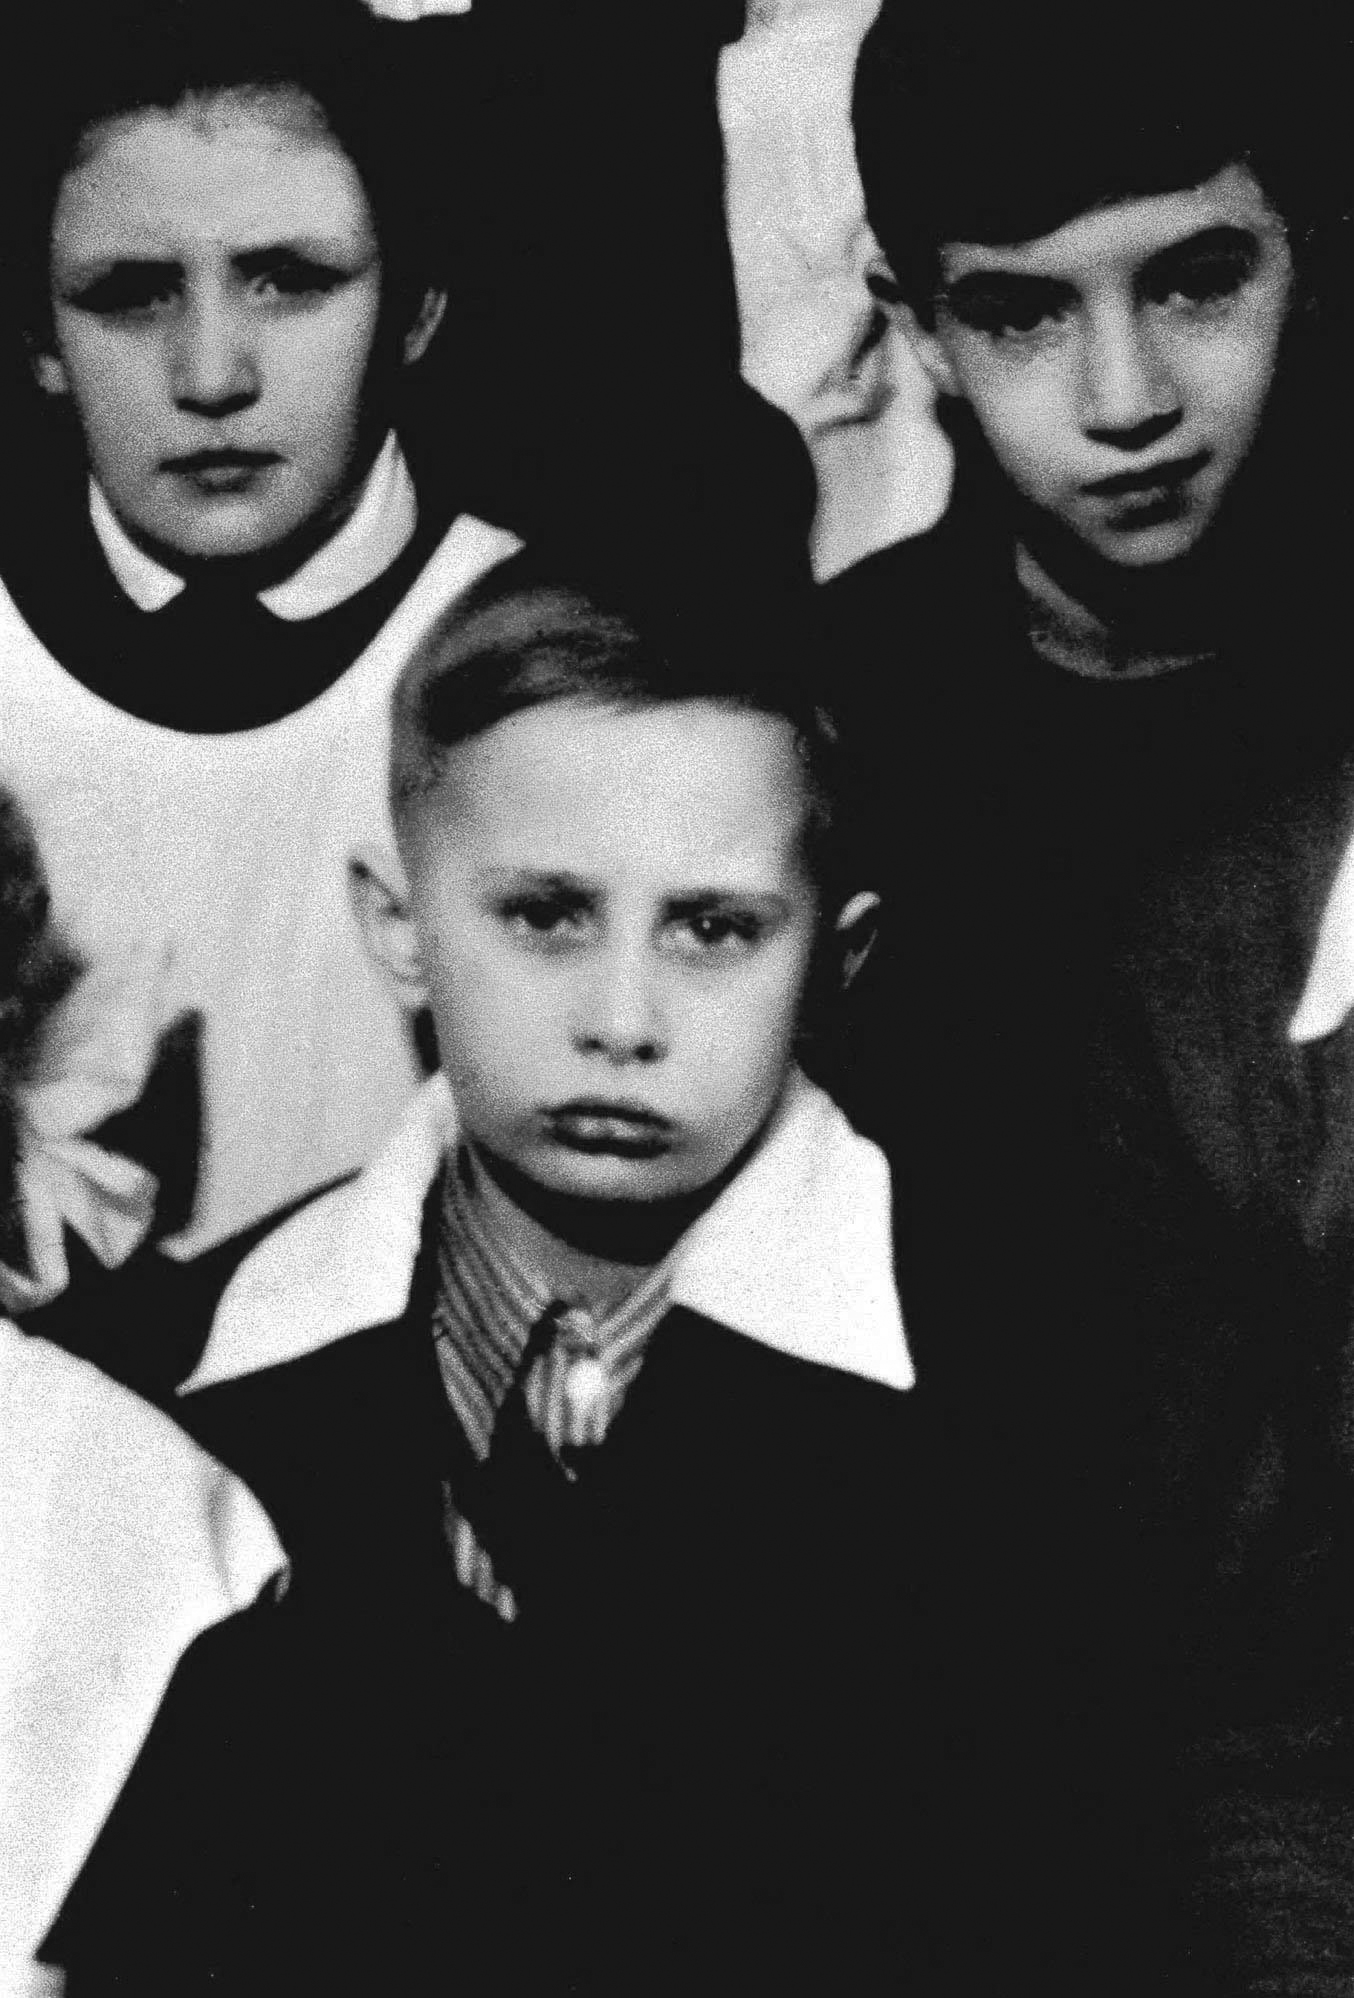 A class photo of Vladimir Putin in St. Petersburg, circa 1960.